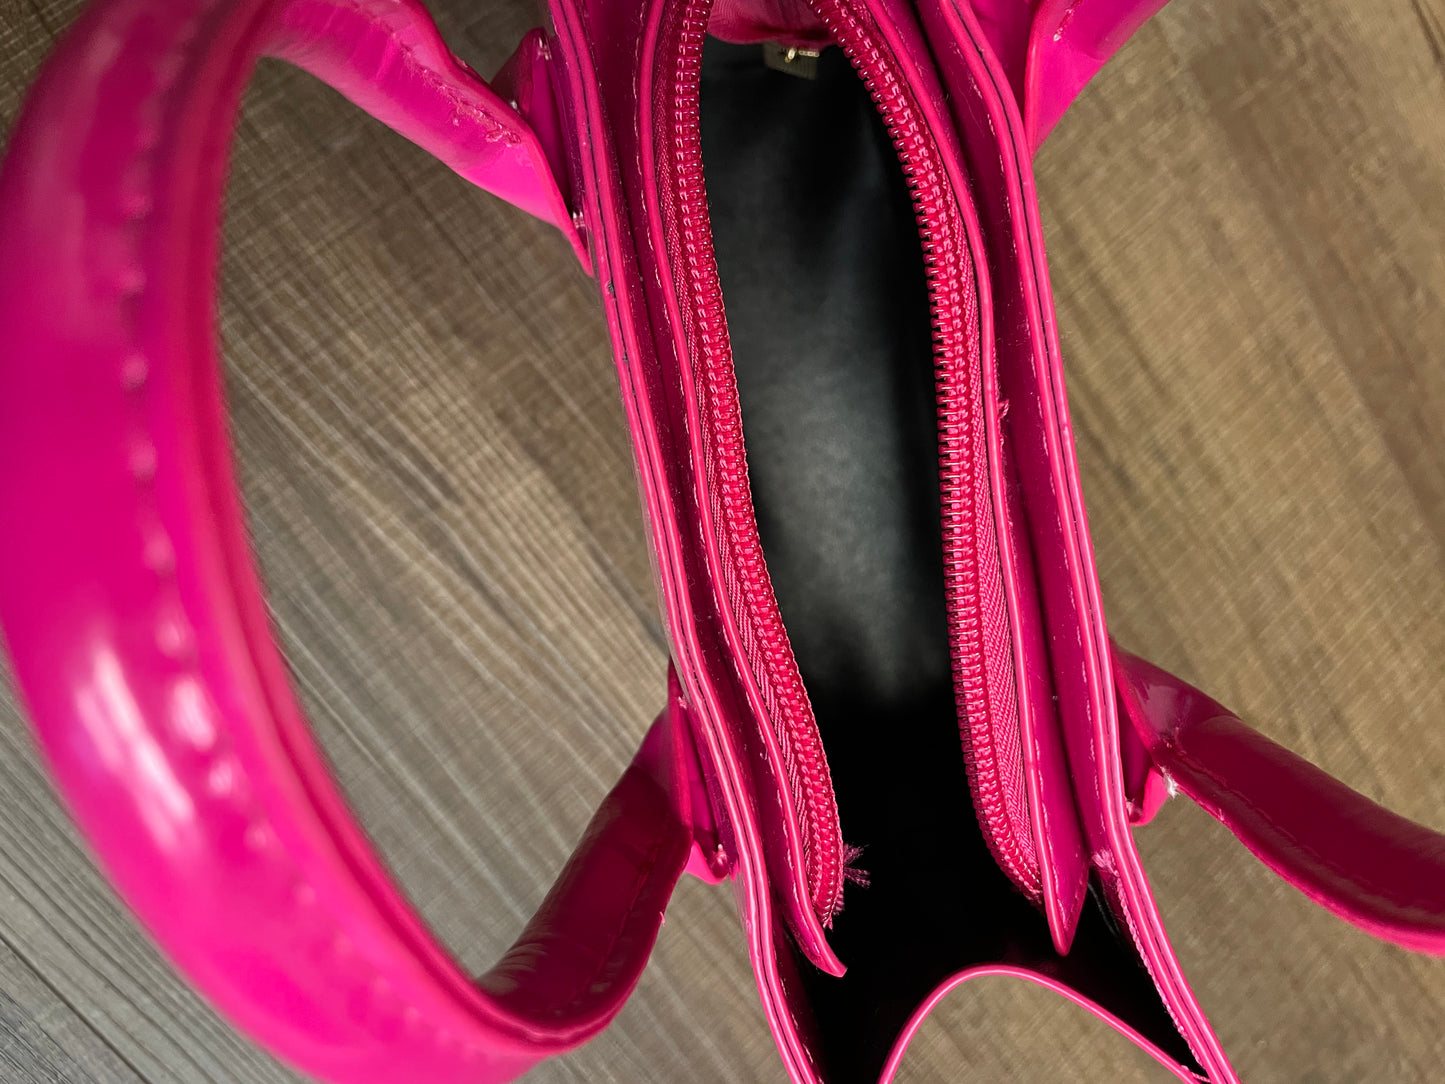 Faux Leather Glossy Pink Handbag